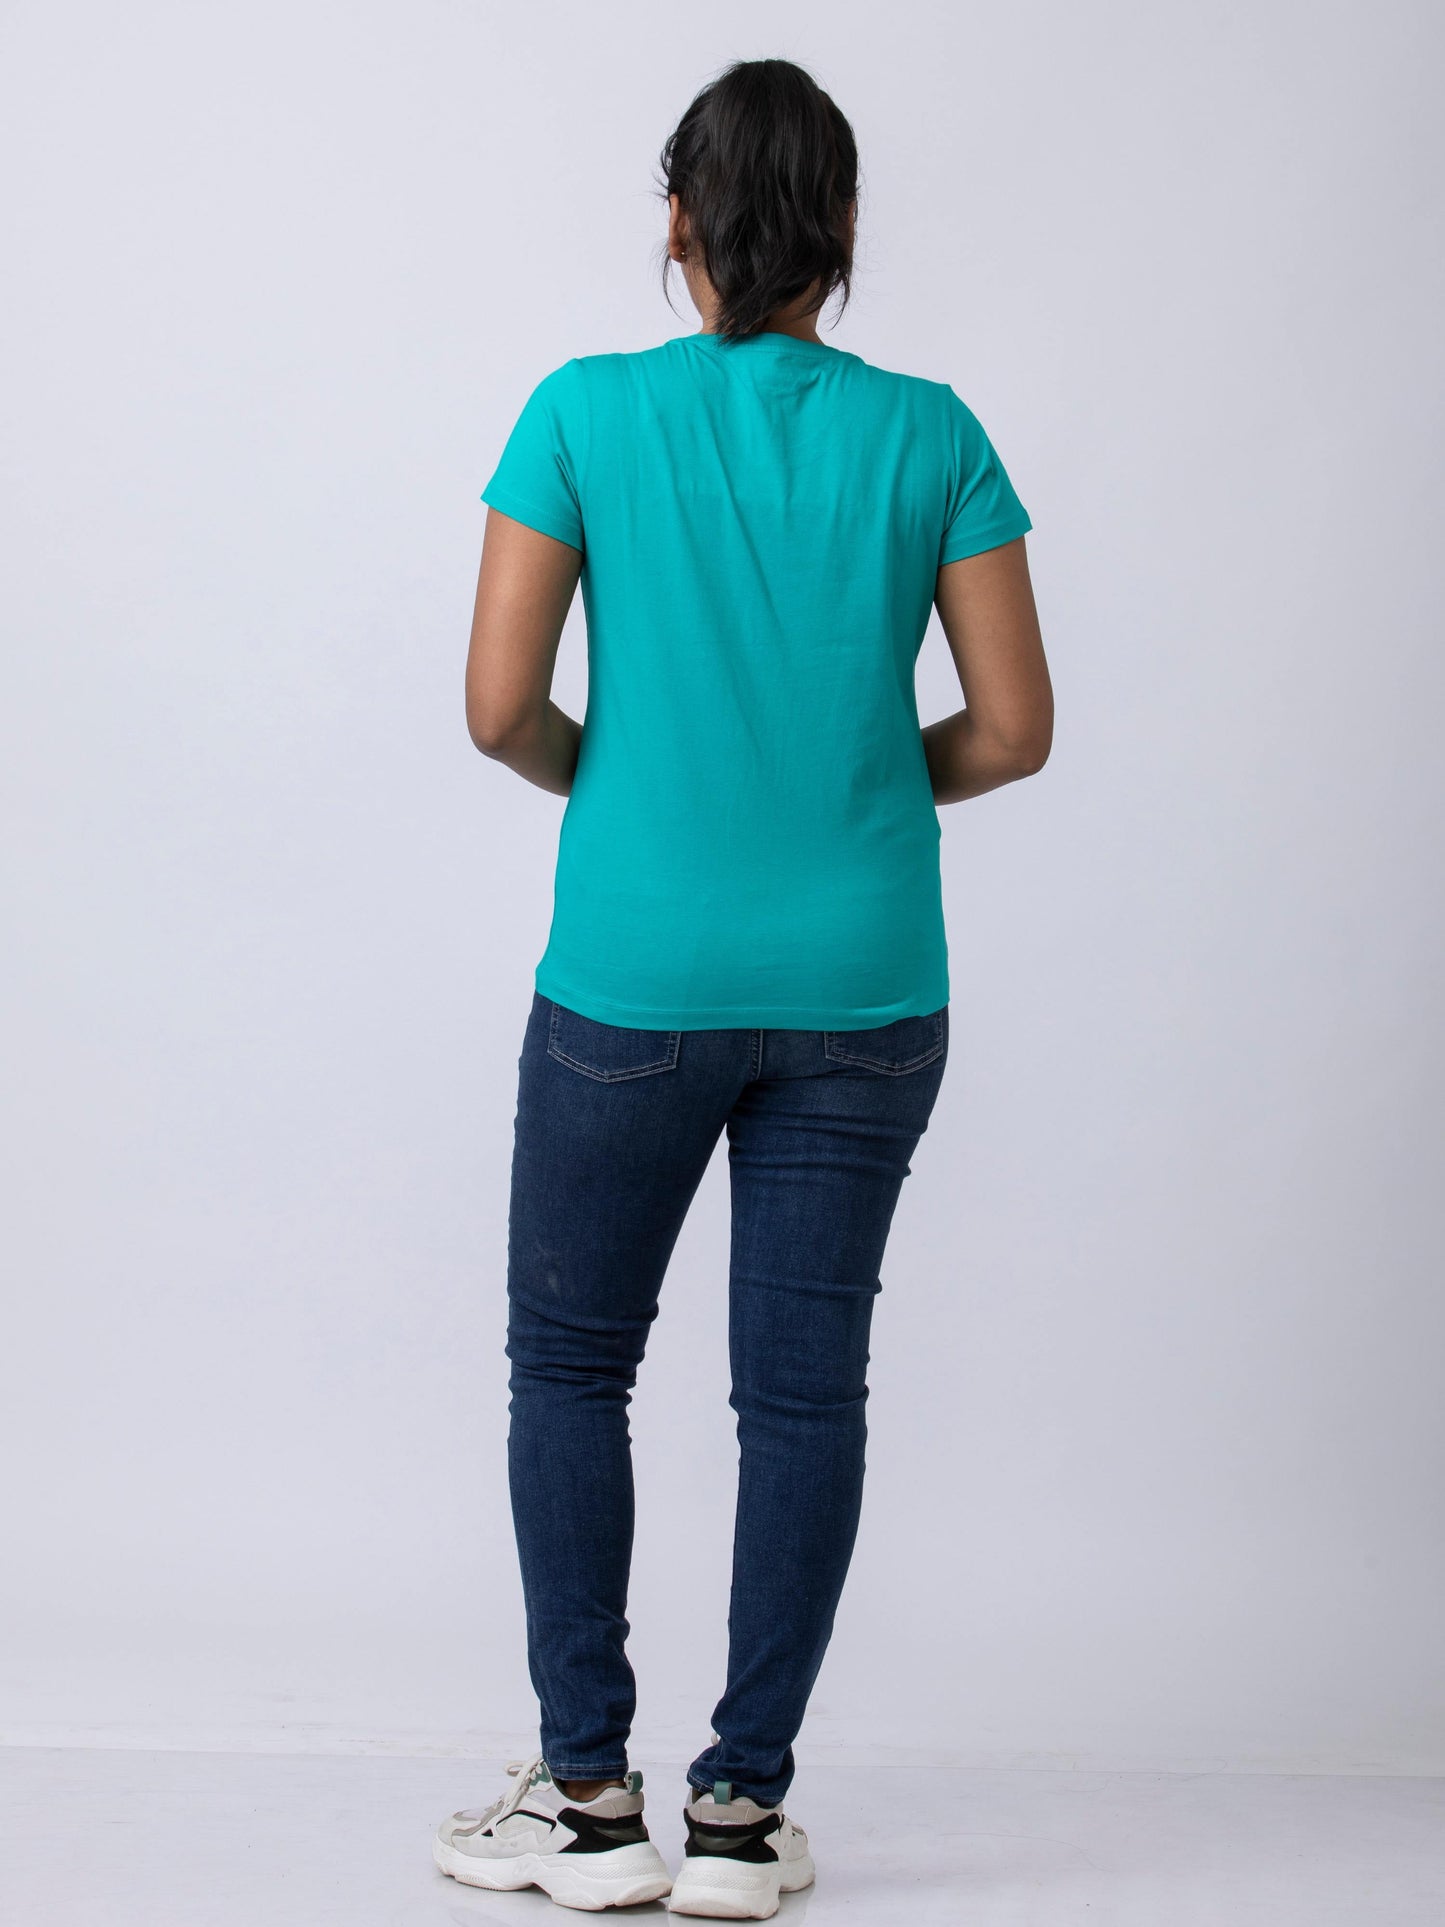 Soft & Premium Women's Cotton T-Shirt - Green Parrot